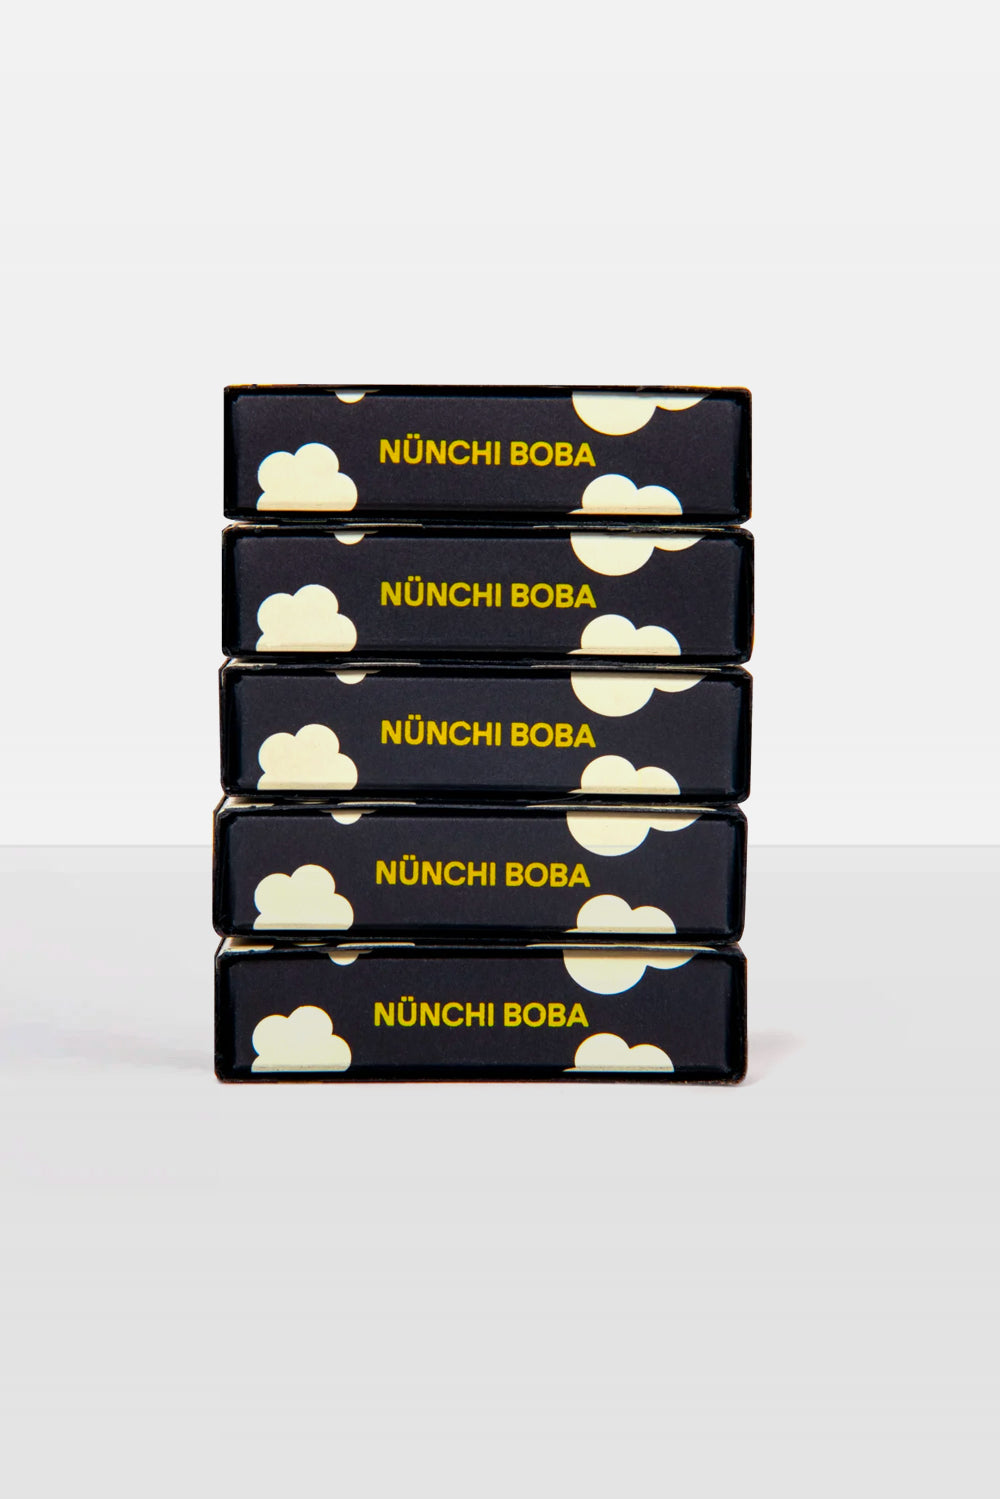 Nunchi Boba Mixed Citrus Oolong CBD Gummies by Rose Los Angeles